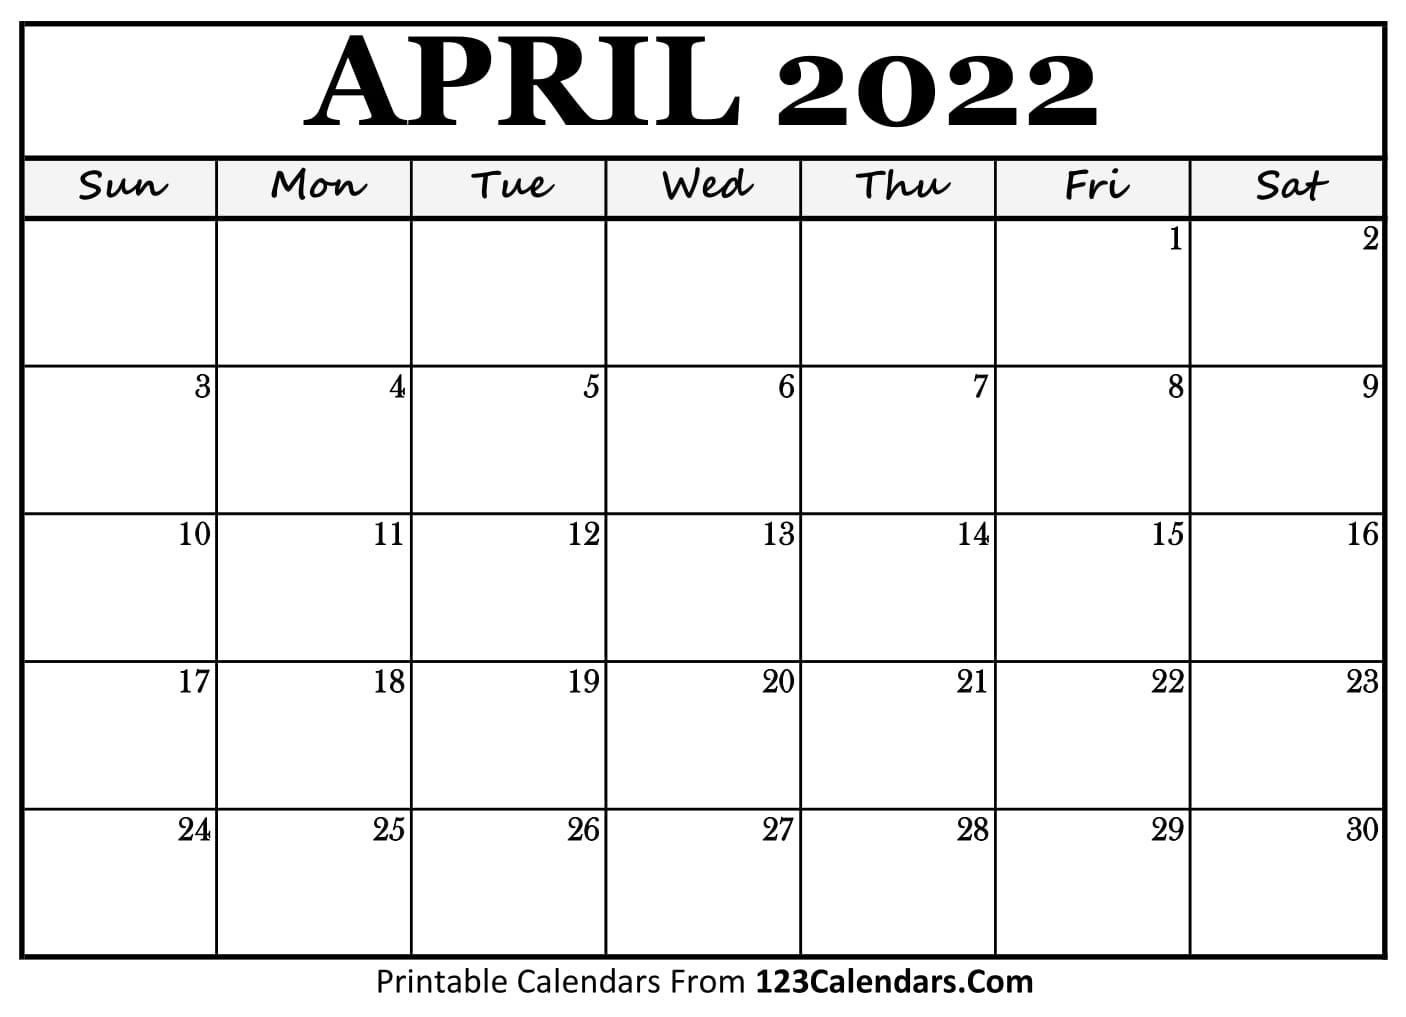 Month Of April 2022 Calendar Printable April 2022 Calendar Templates - 123Calendars.com